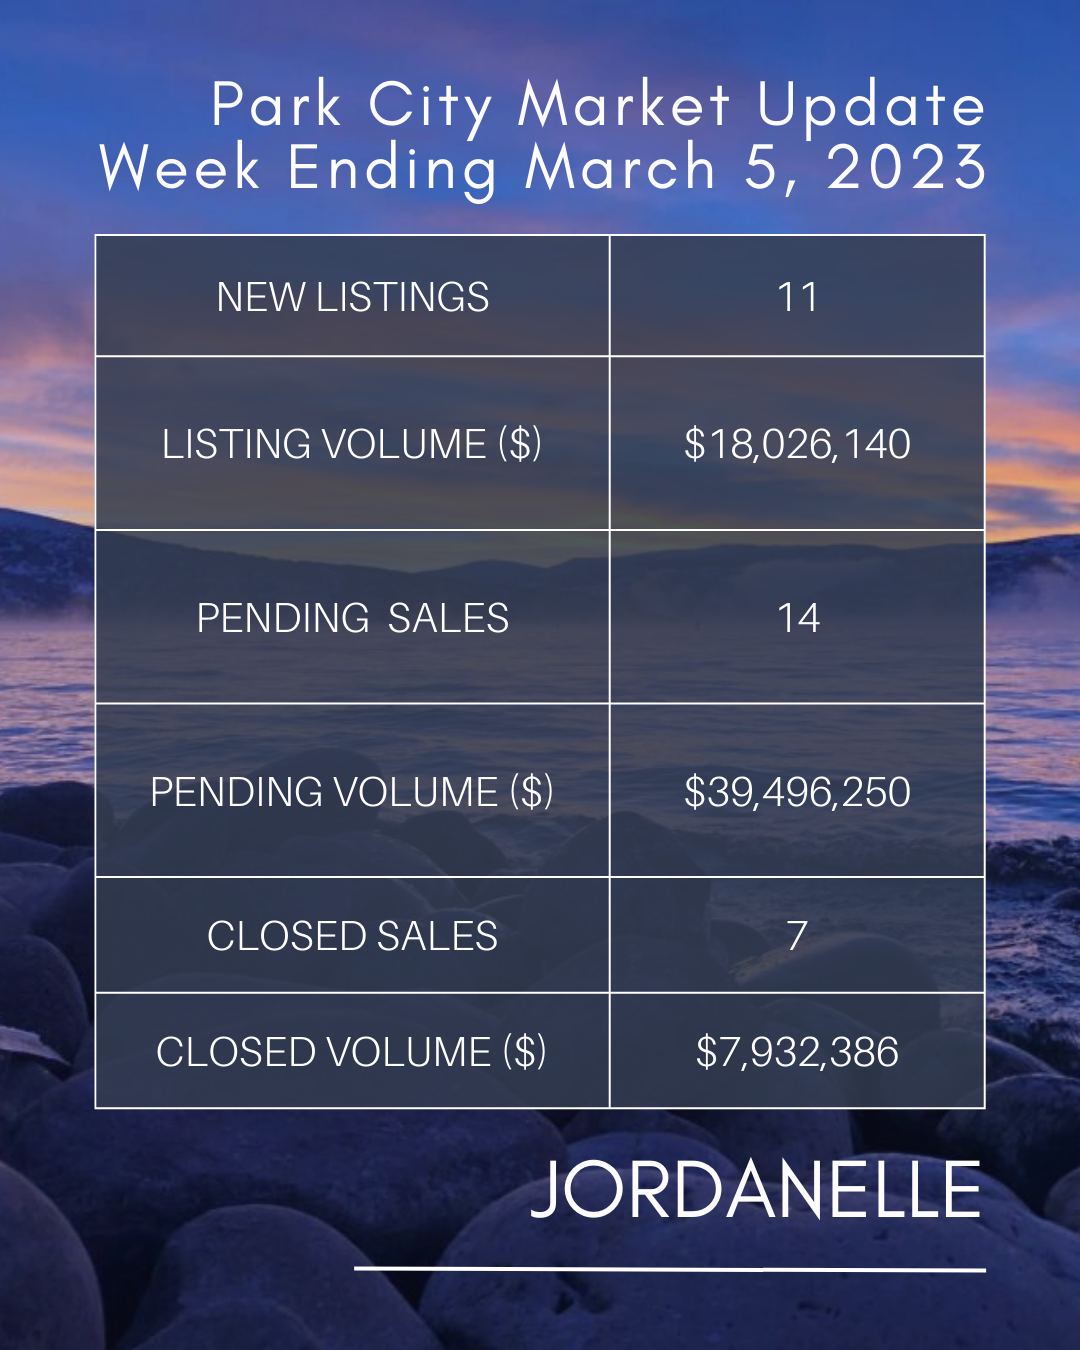 Image of Jordanelle with Market Statistics form March 5, 2023